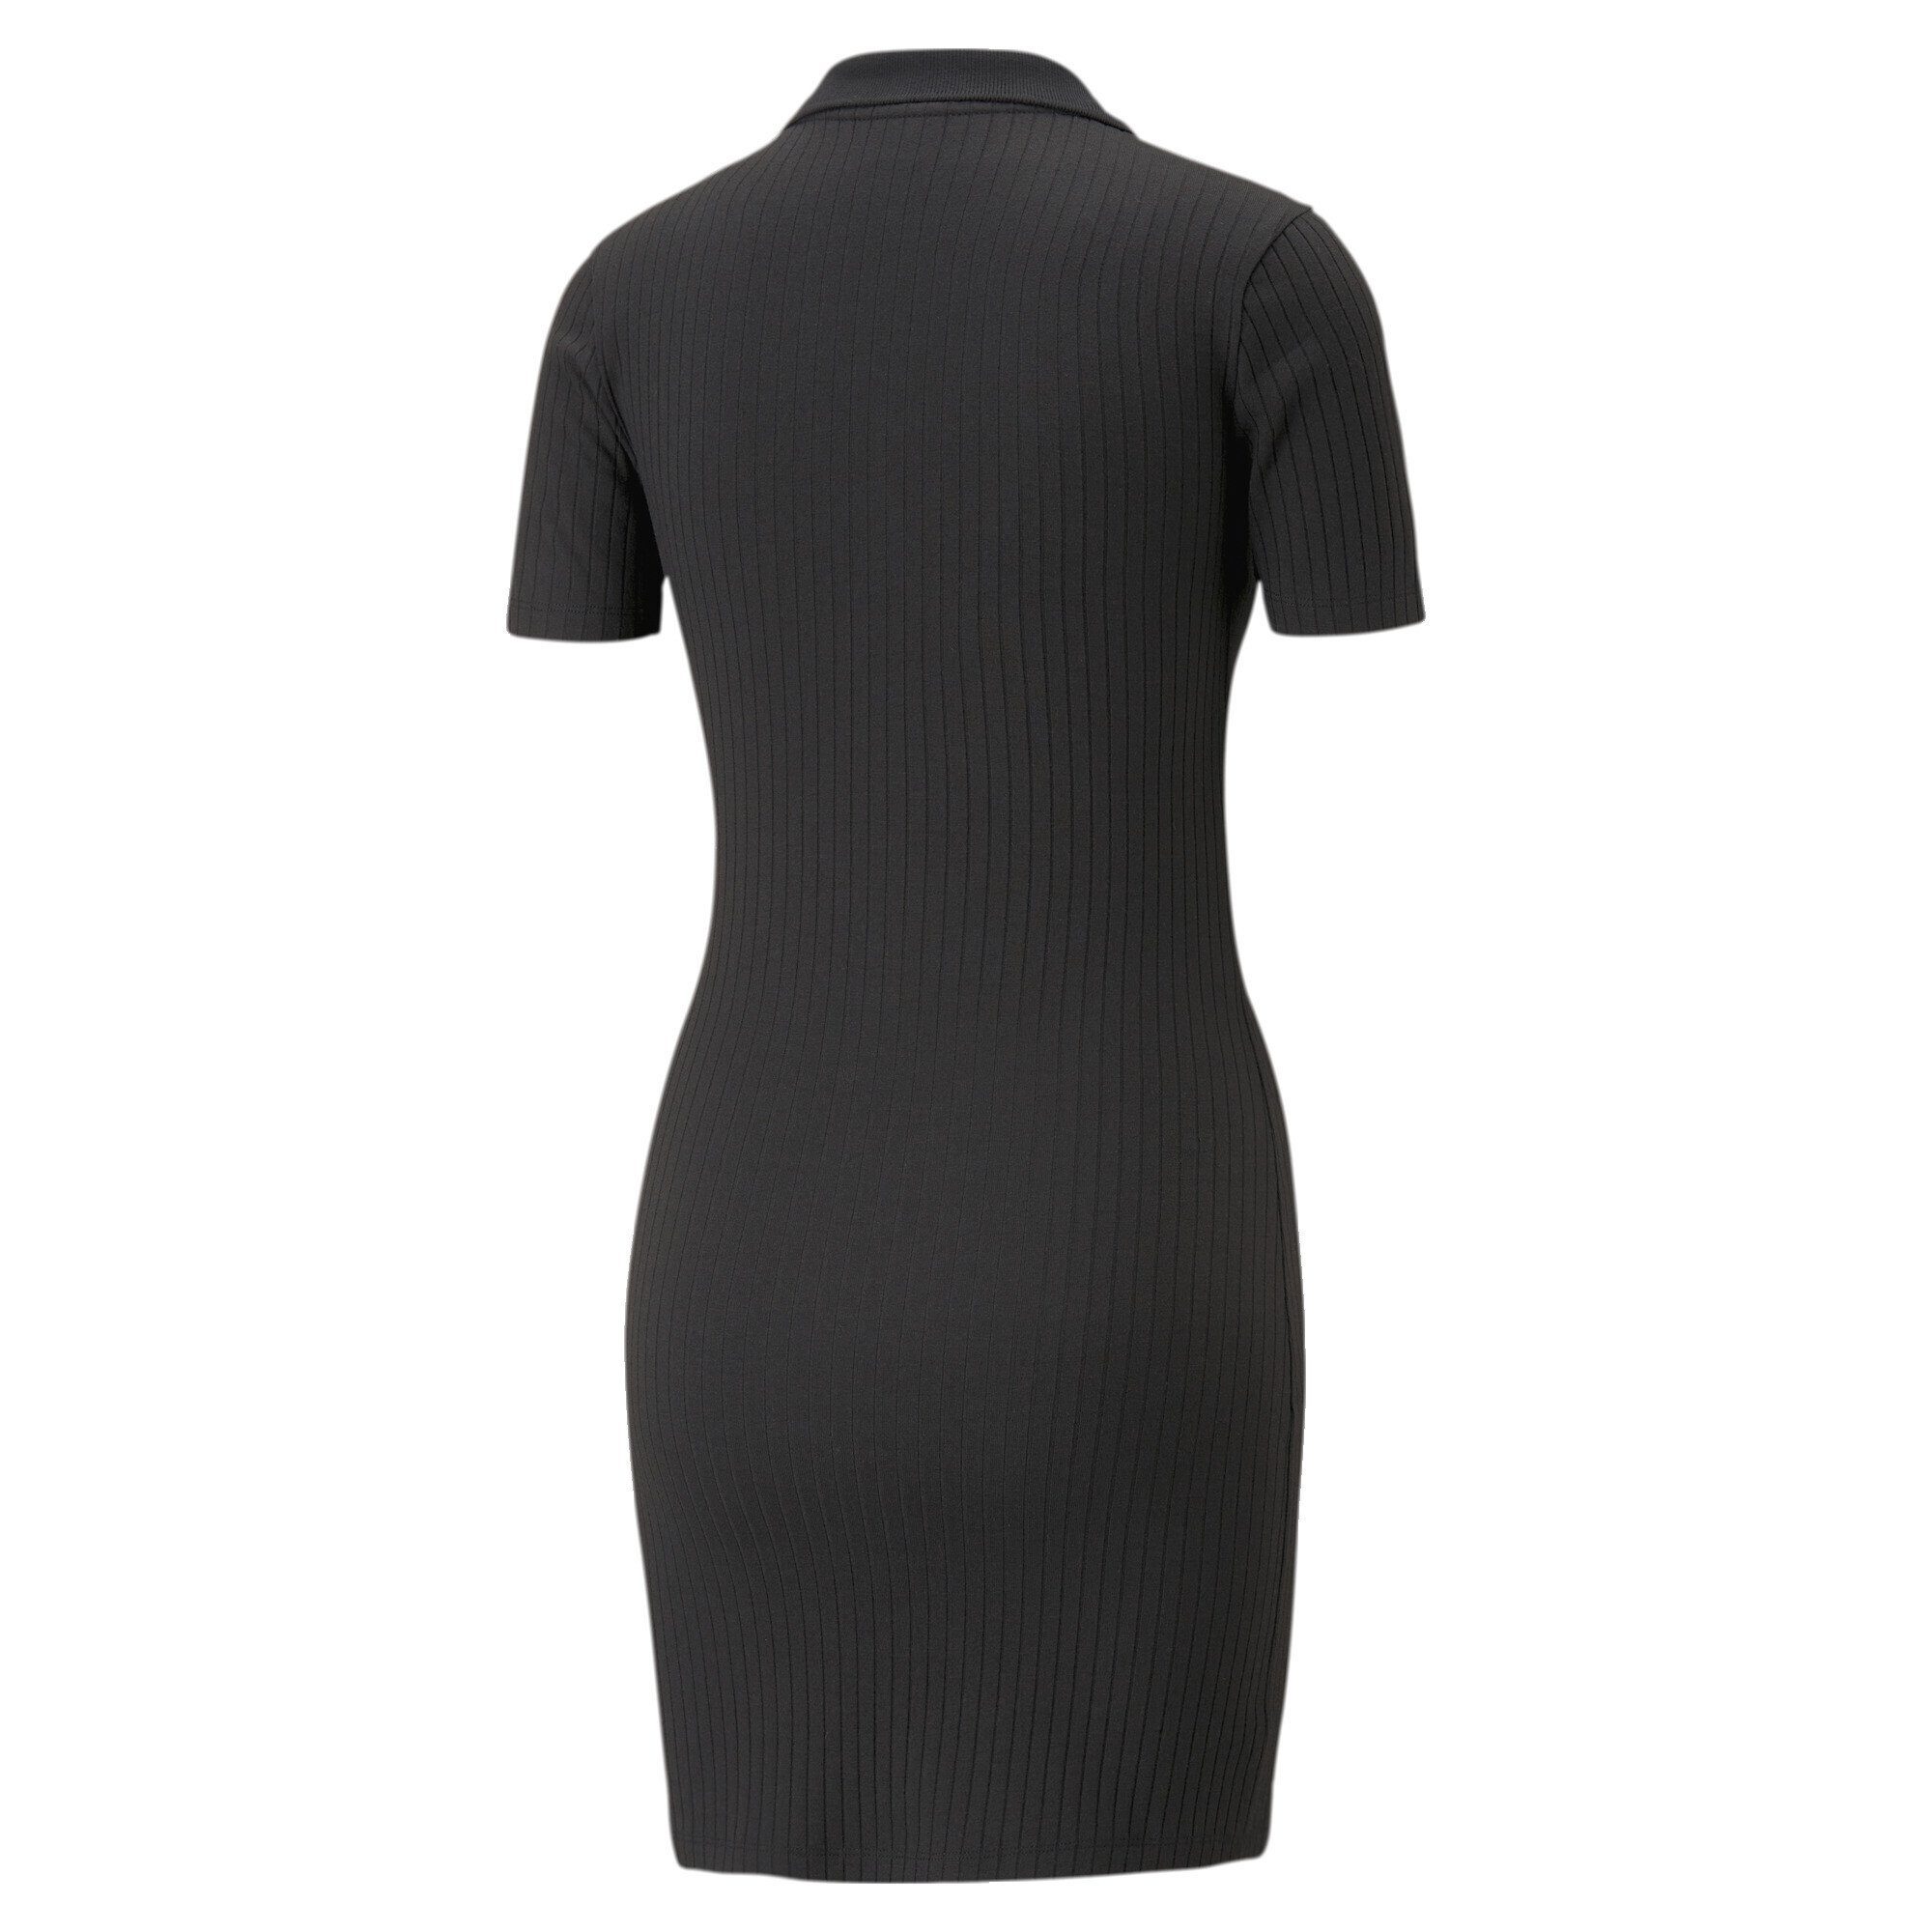 PUMA Sweatkleid Geripptes Black Damen Classics Kleid